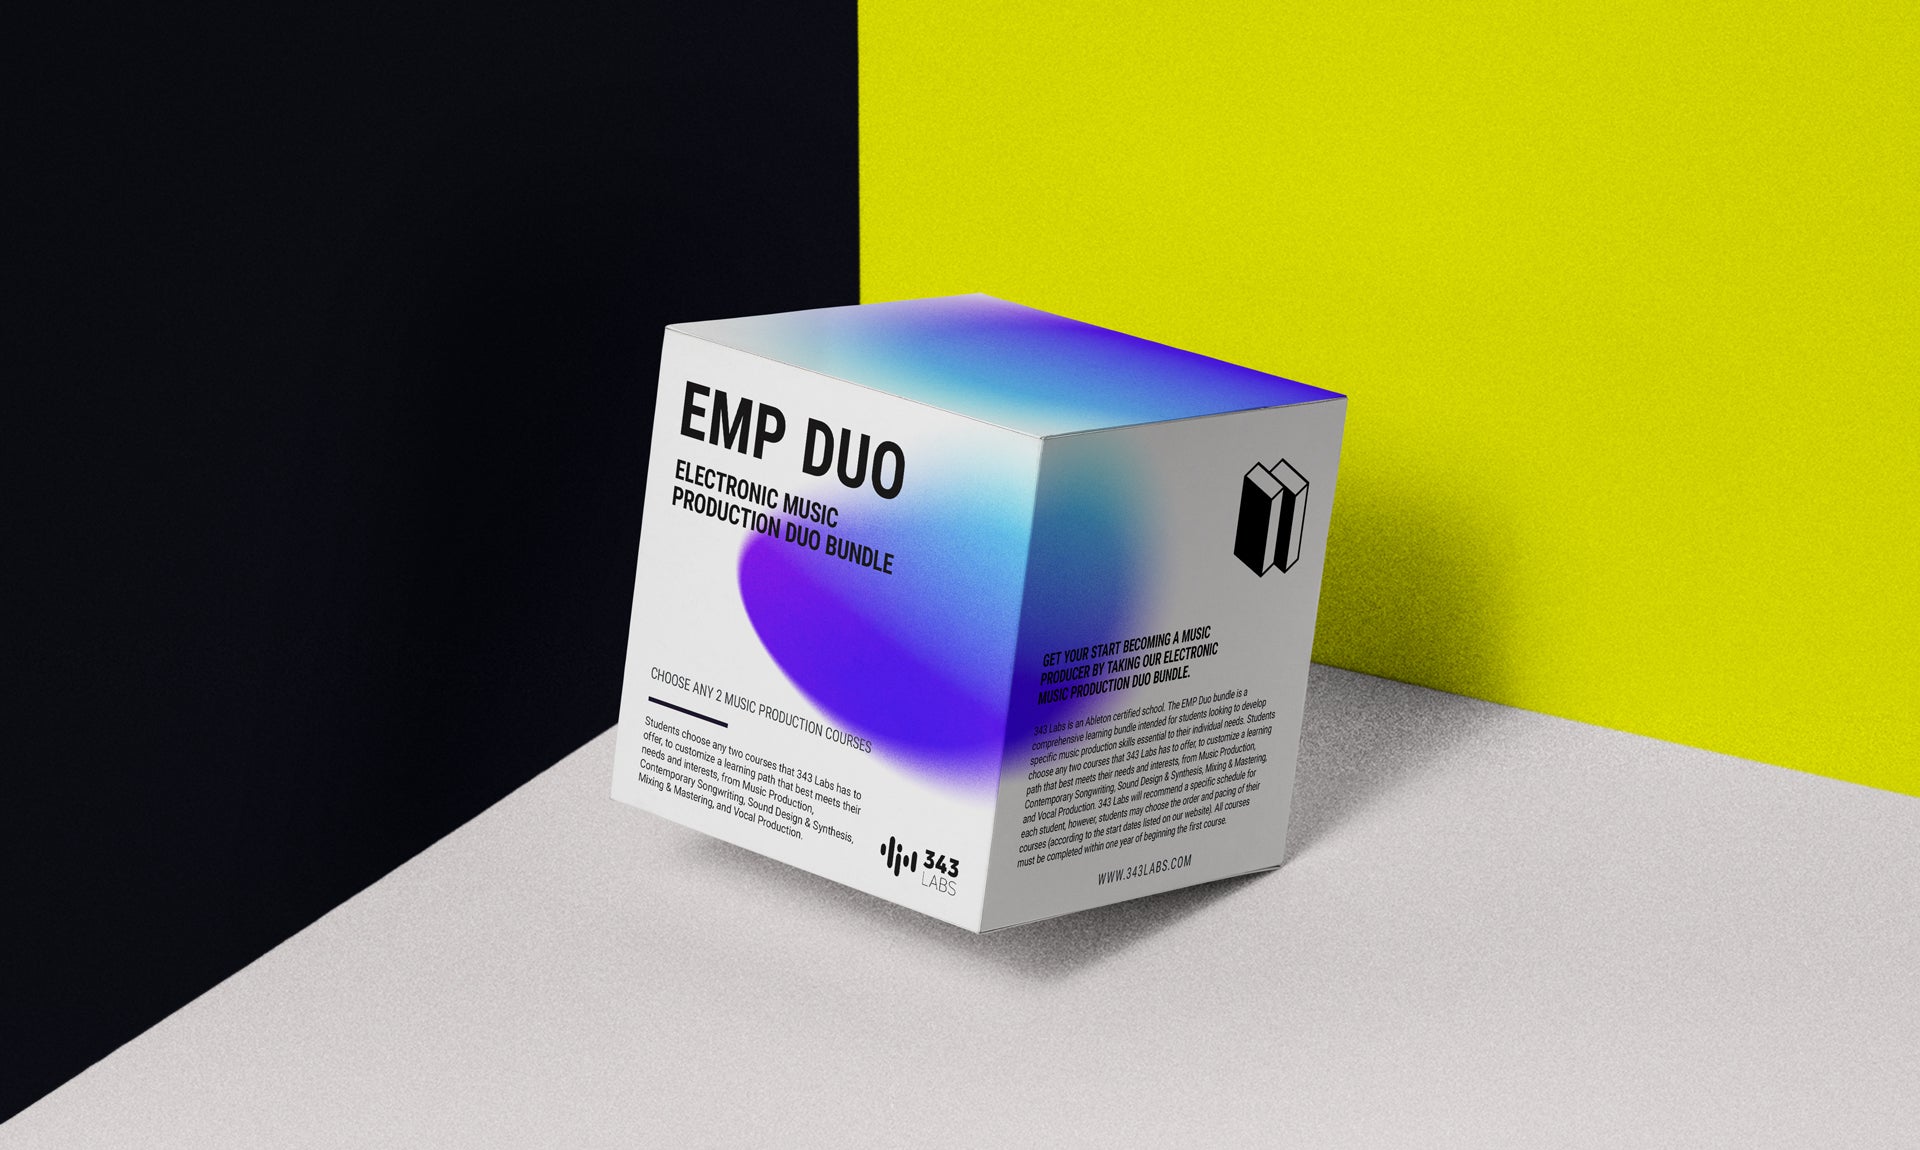 Electronic Music Production Duo Bundle [Online]